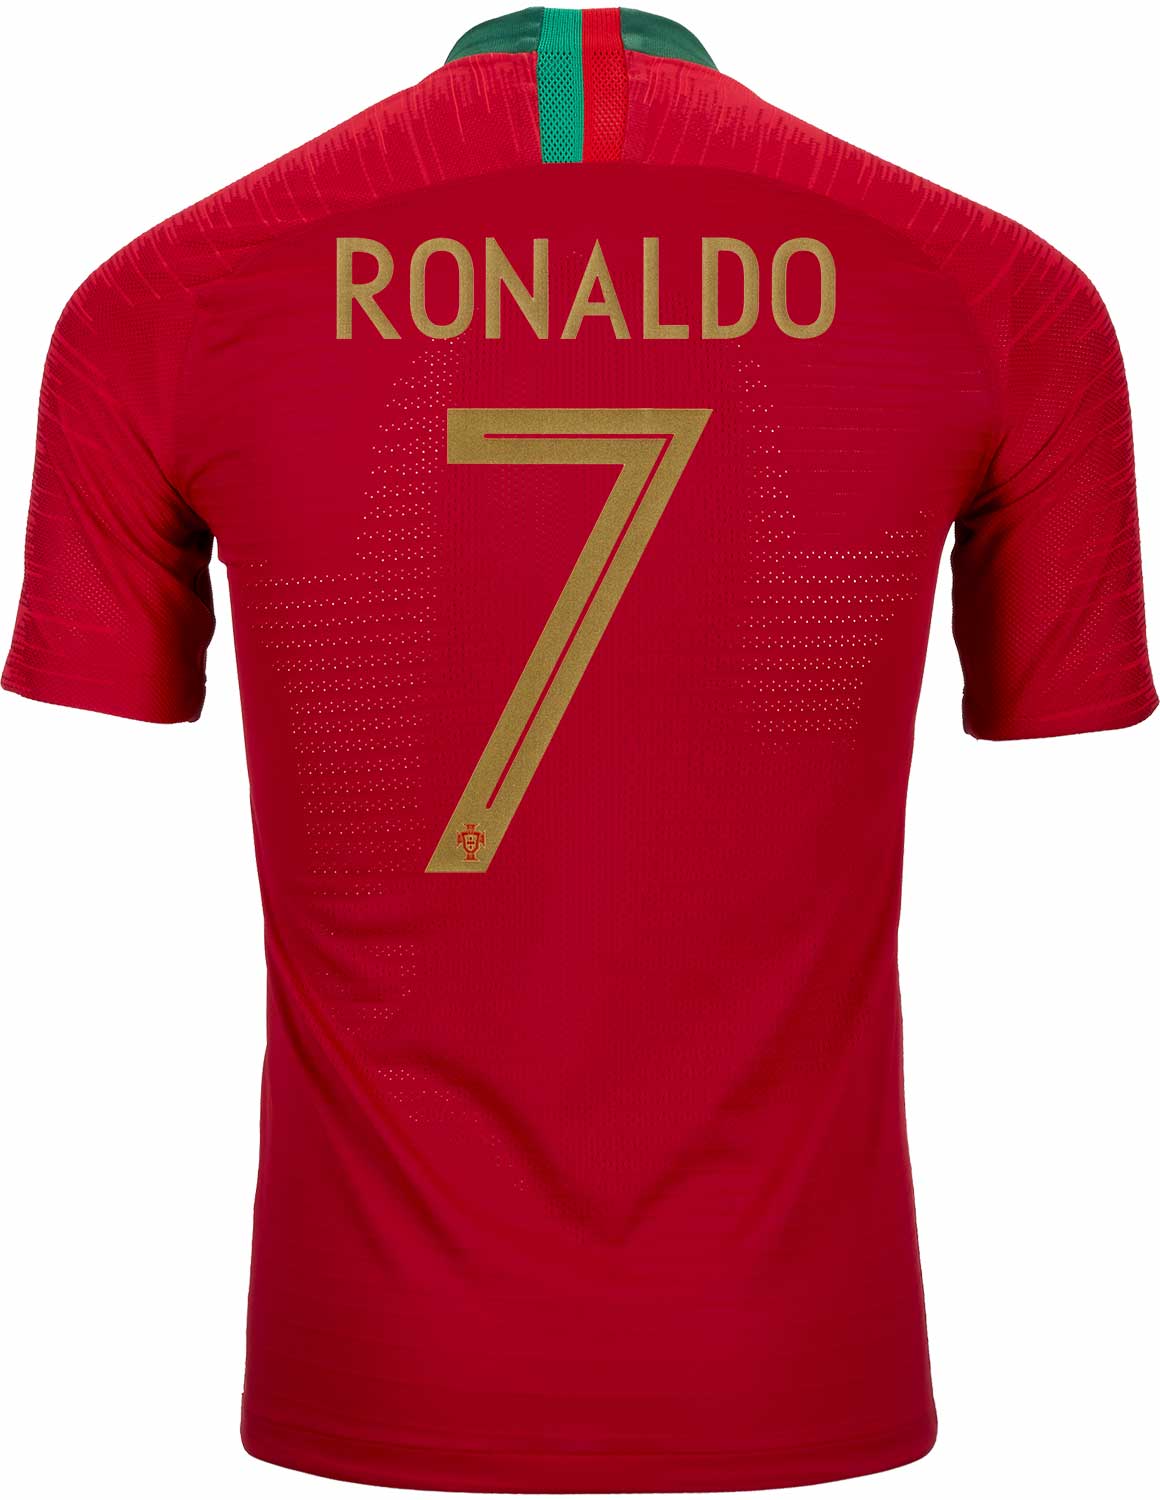 2018/19 Nike Cristiano Ronaldo Portugal Home Match Jersey SoccerPro